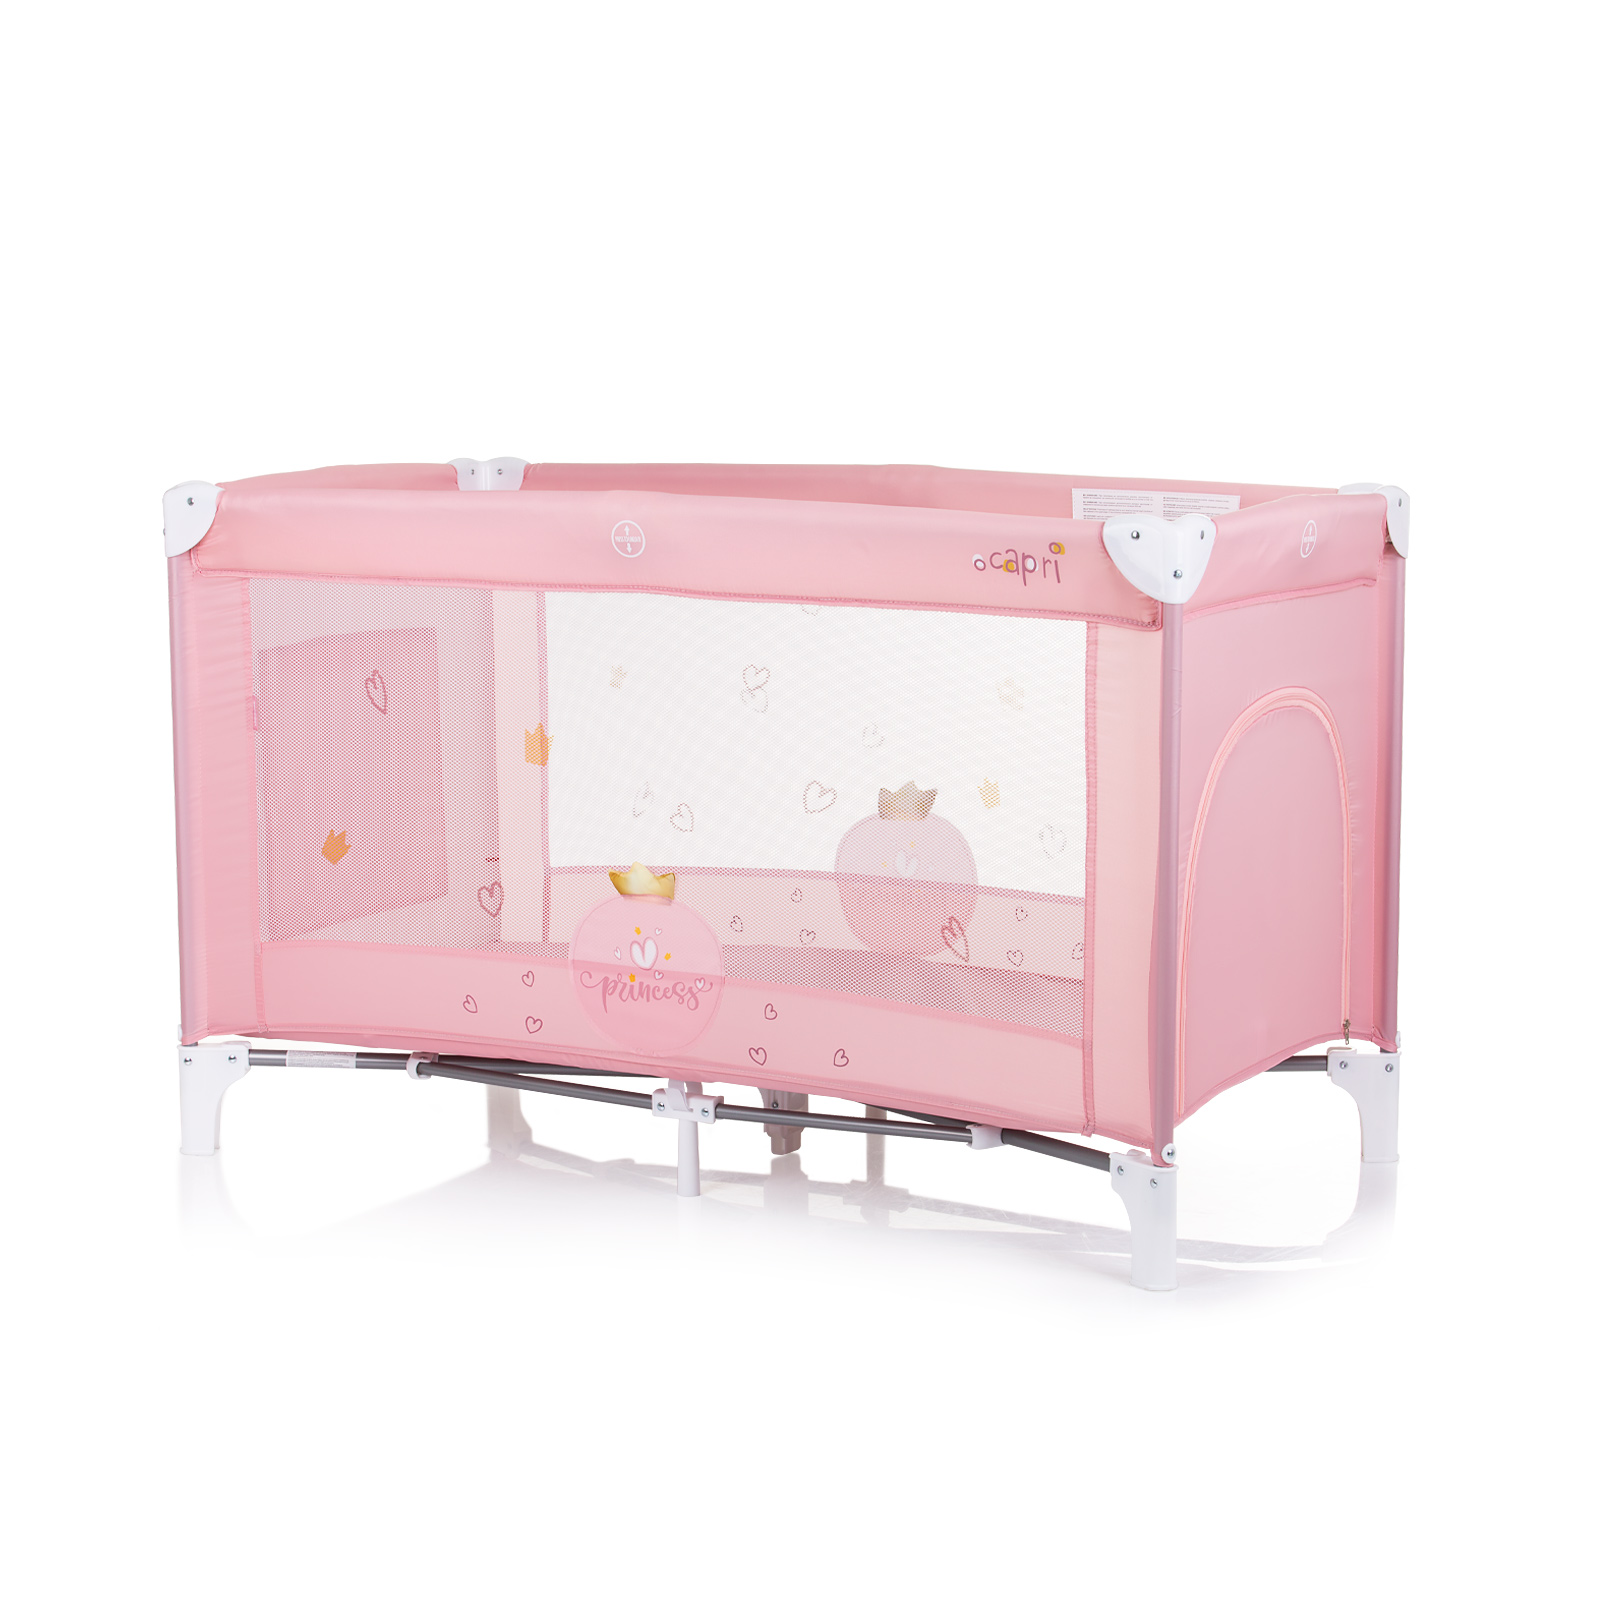 Foldable travel cot "Capri" Princess pink KOSIK2404PR